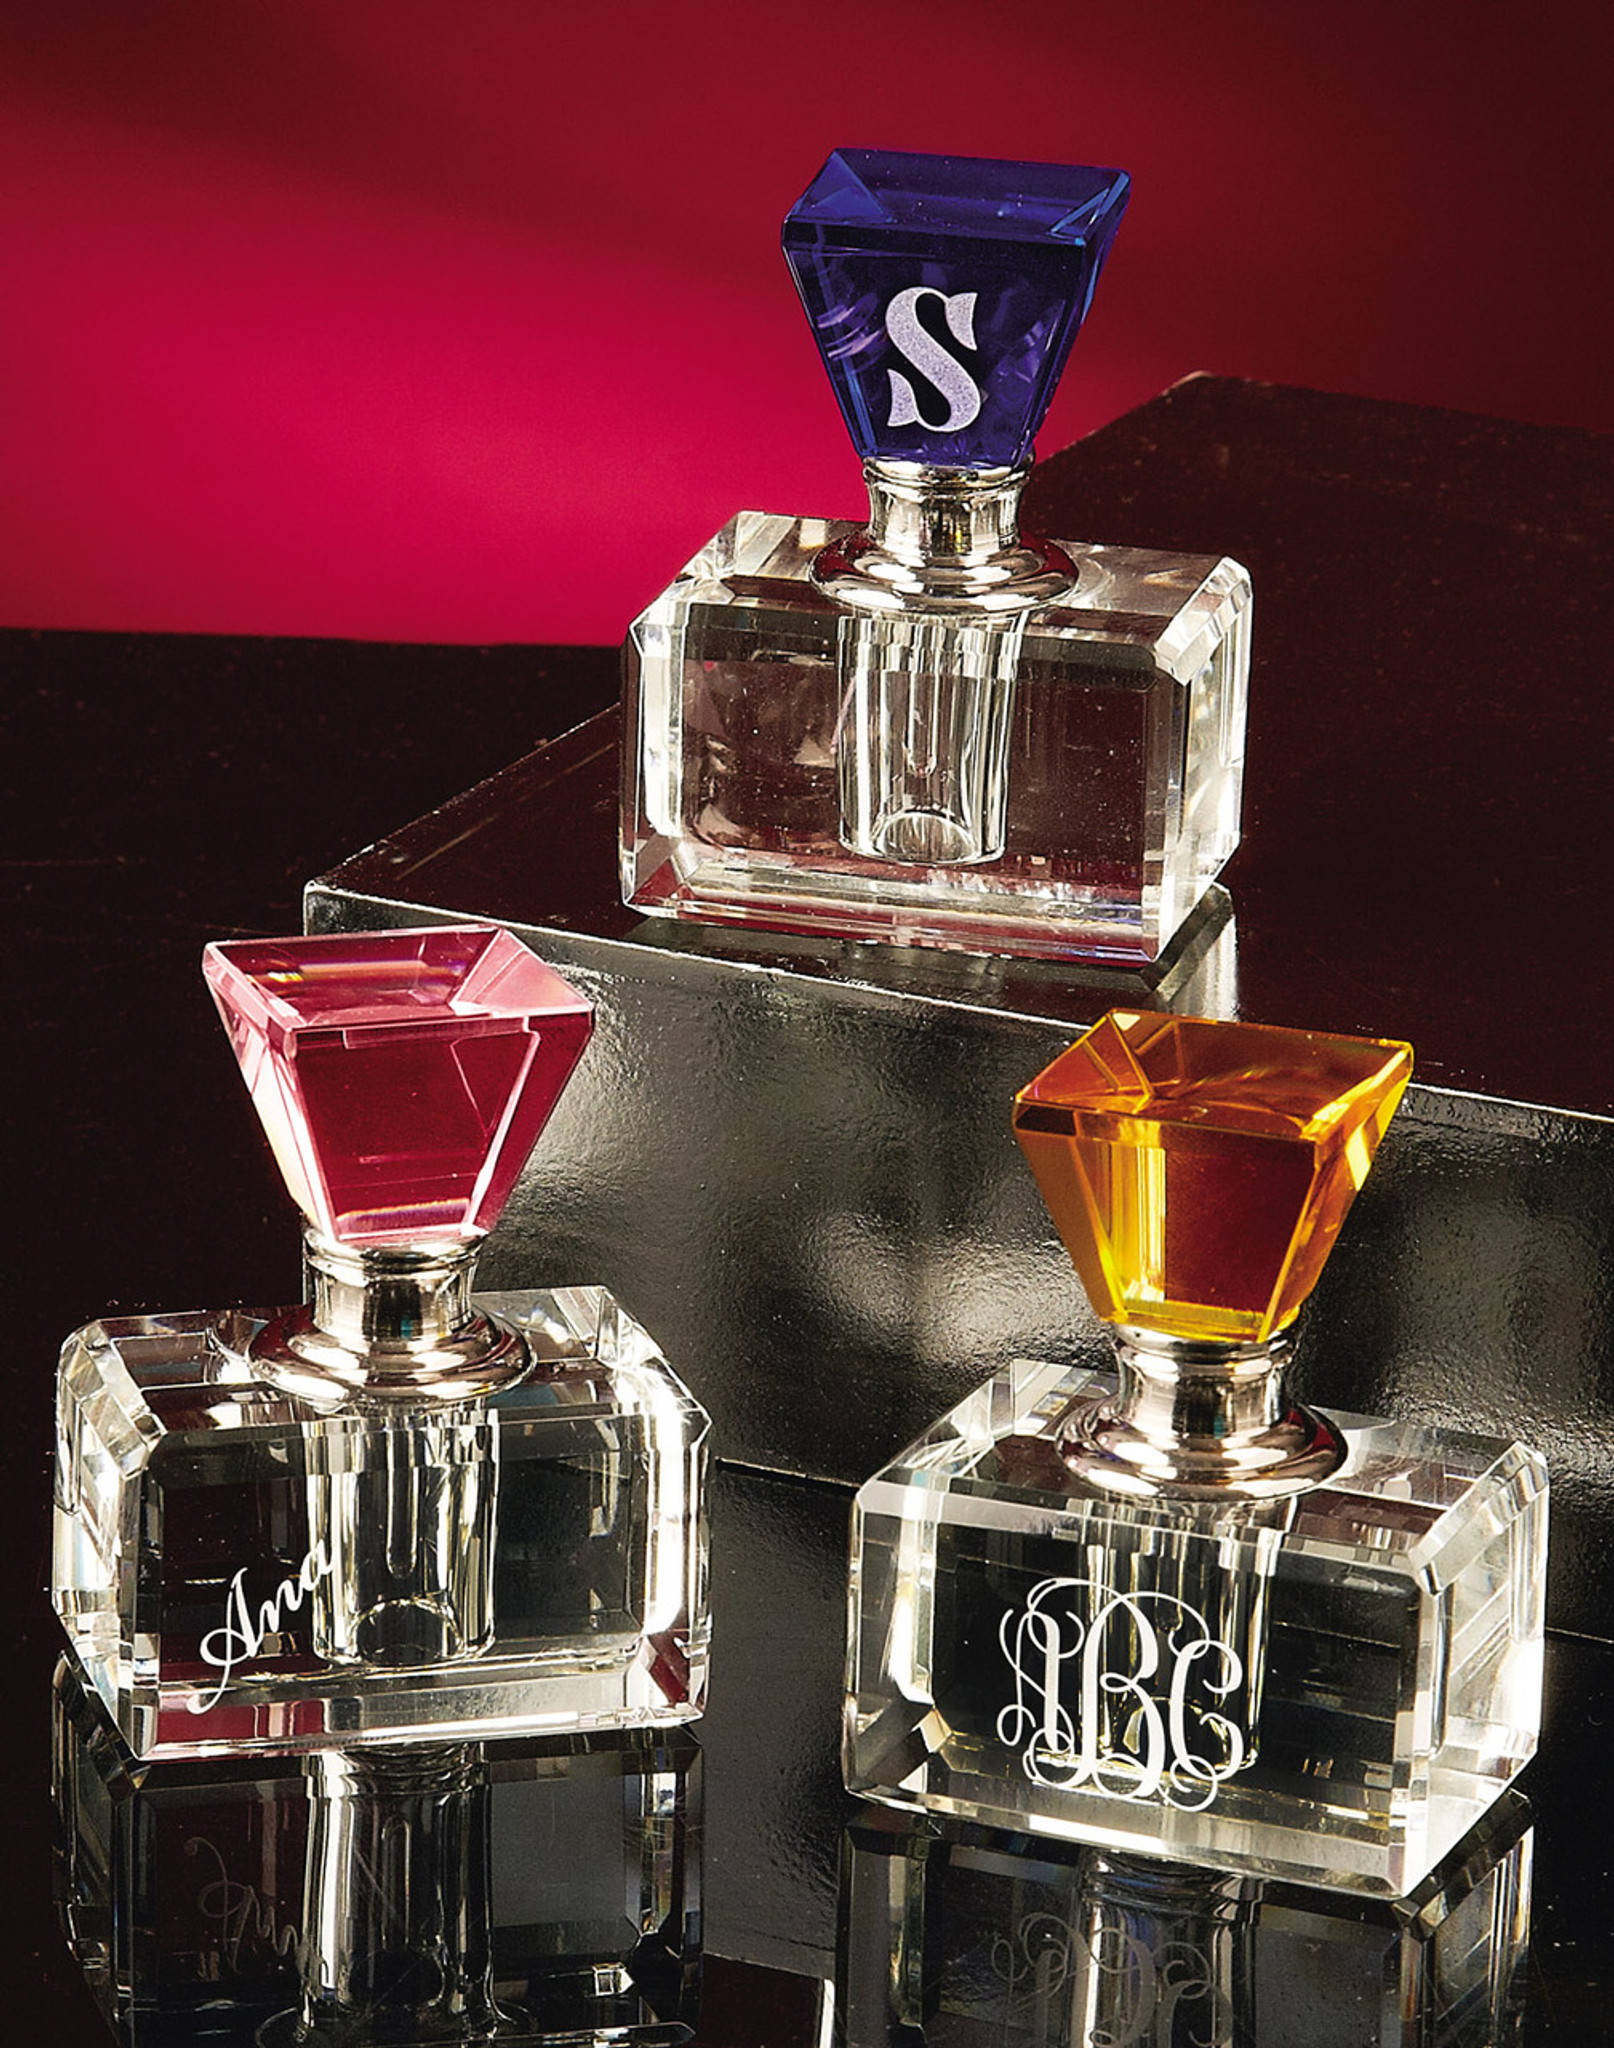 miniature set perfume